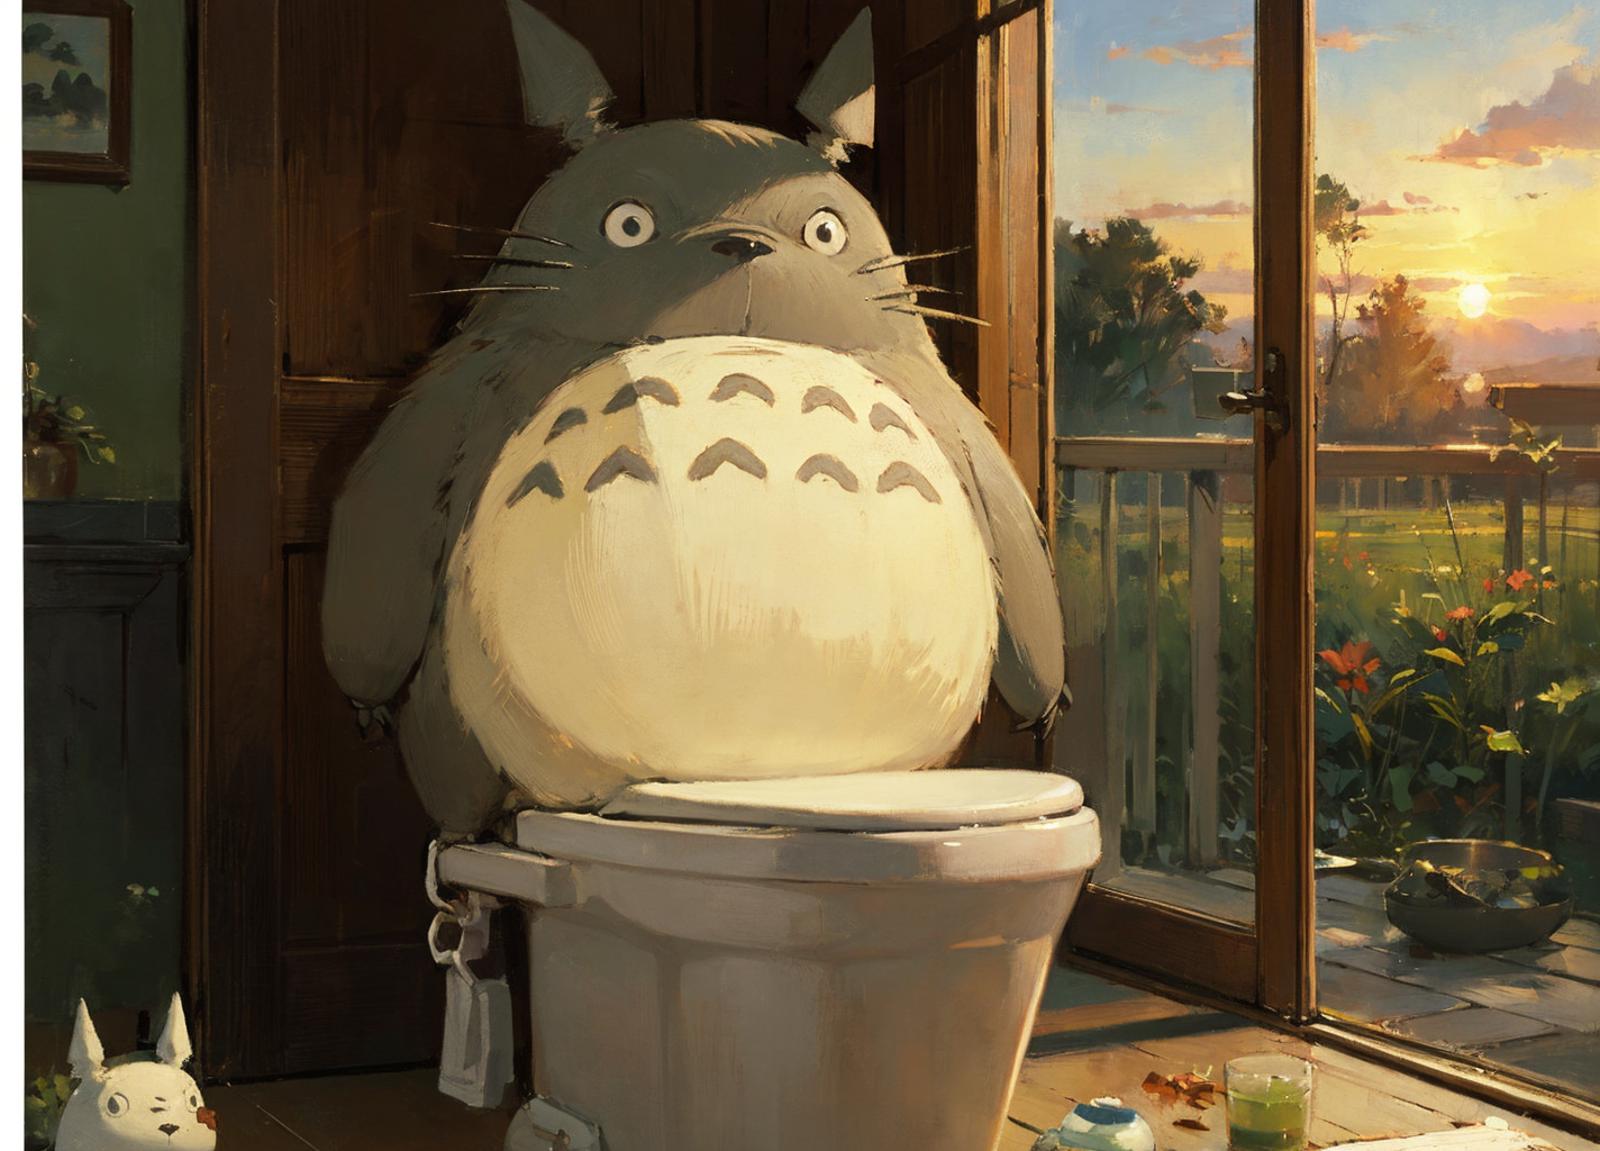 Totoro LoRA image by seventh_arrow892